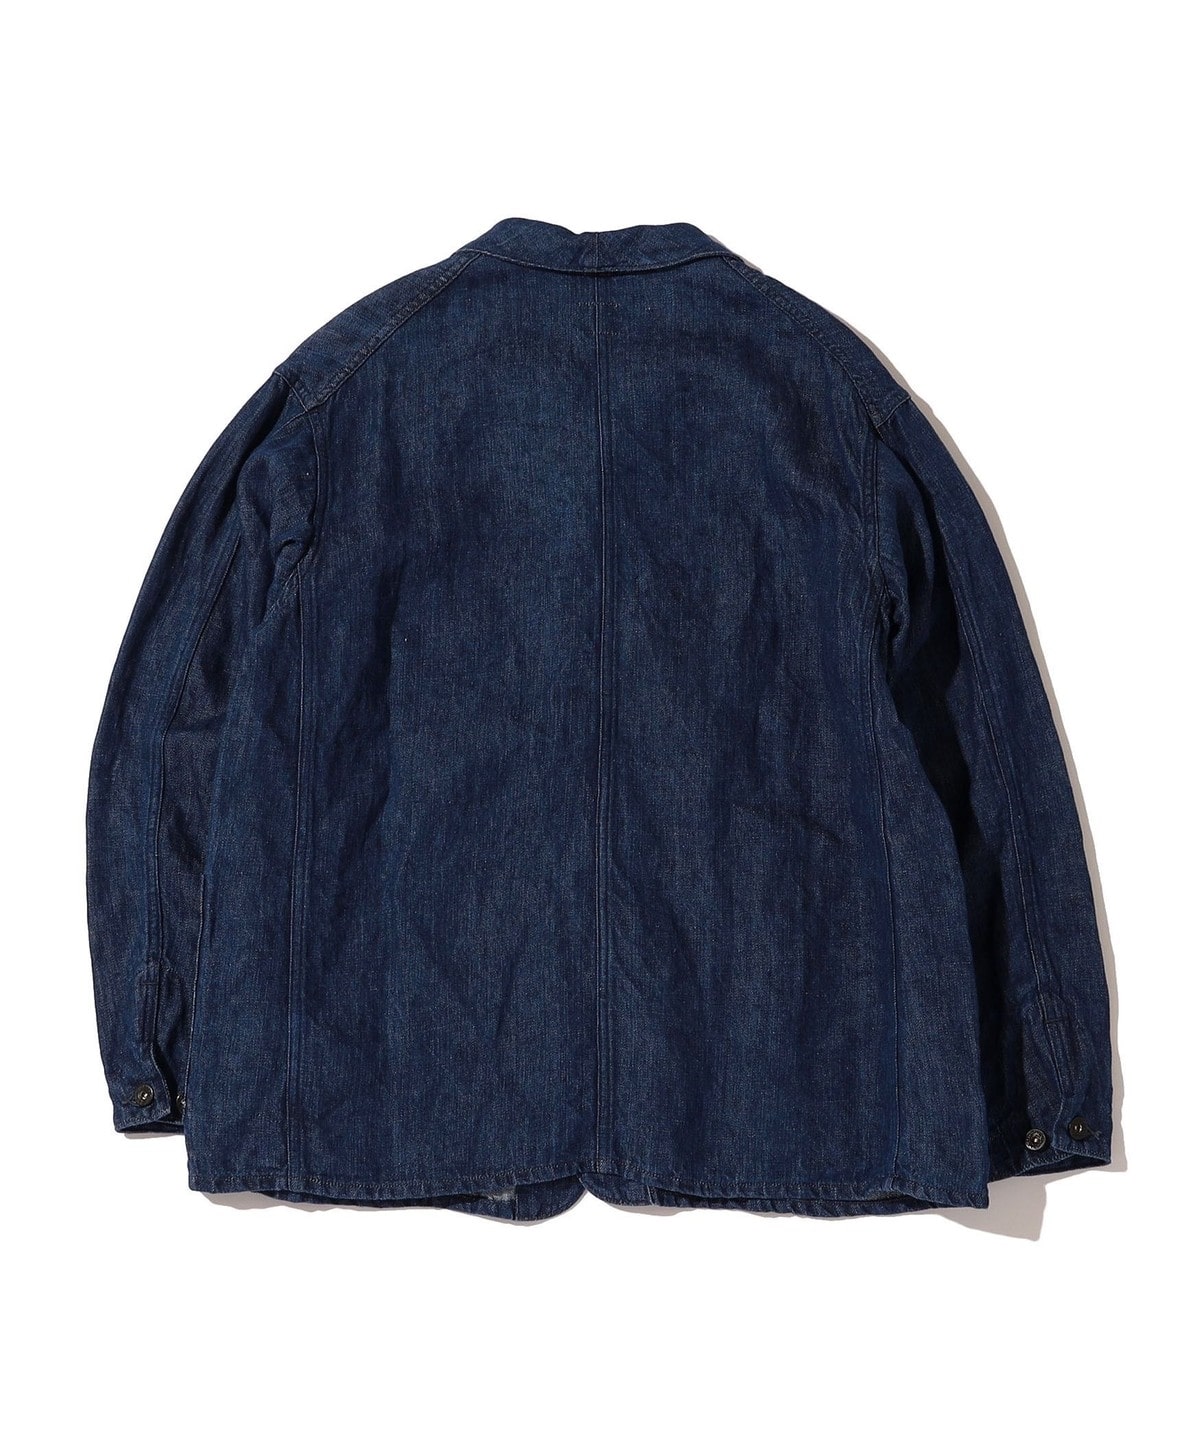 Southwick別注】Post O'Alls: #1106 3 Poket Jacket / Linen Indigo 